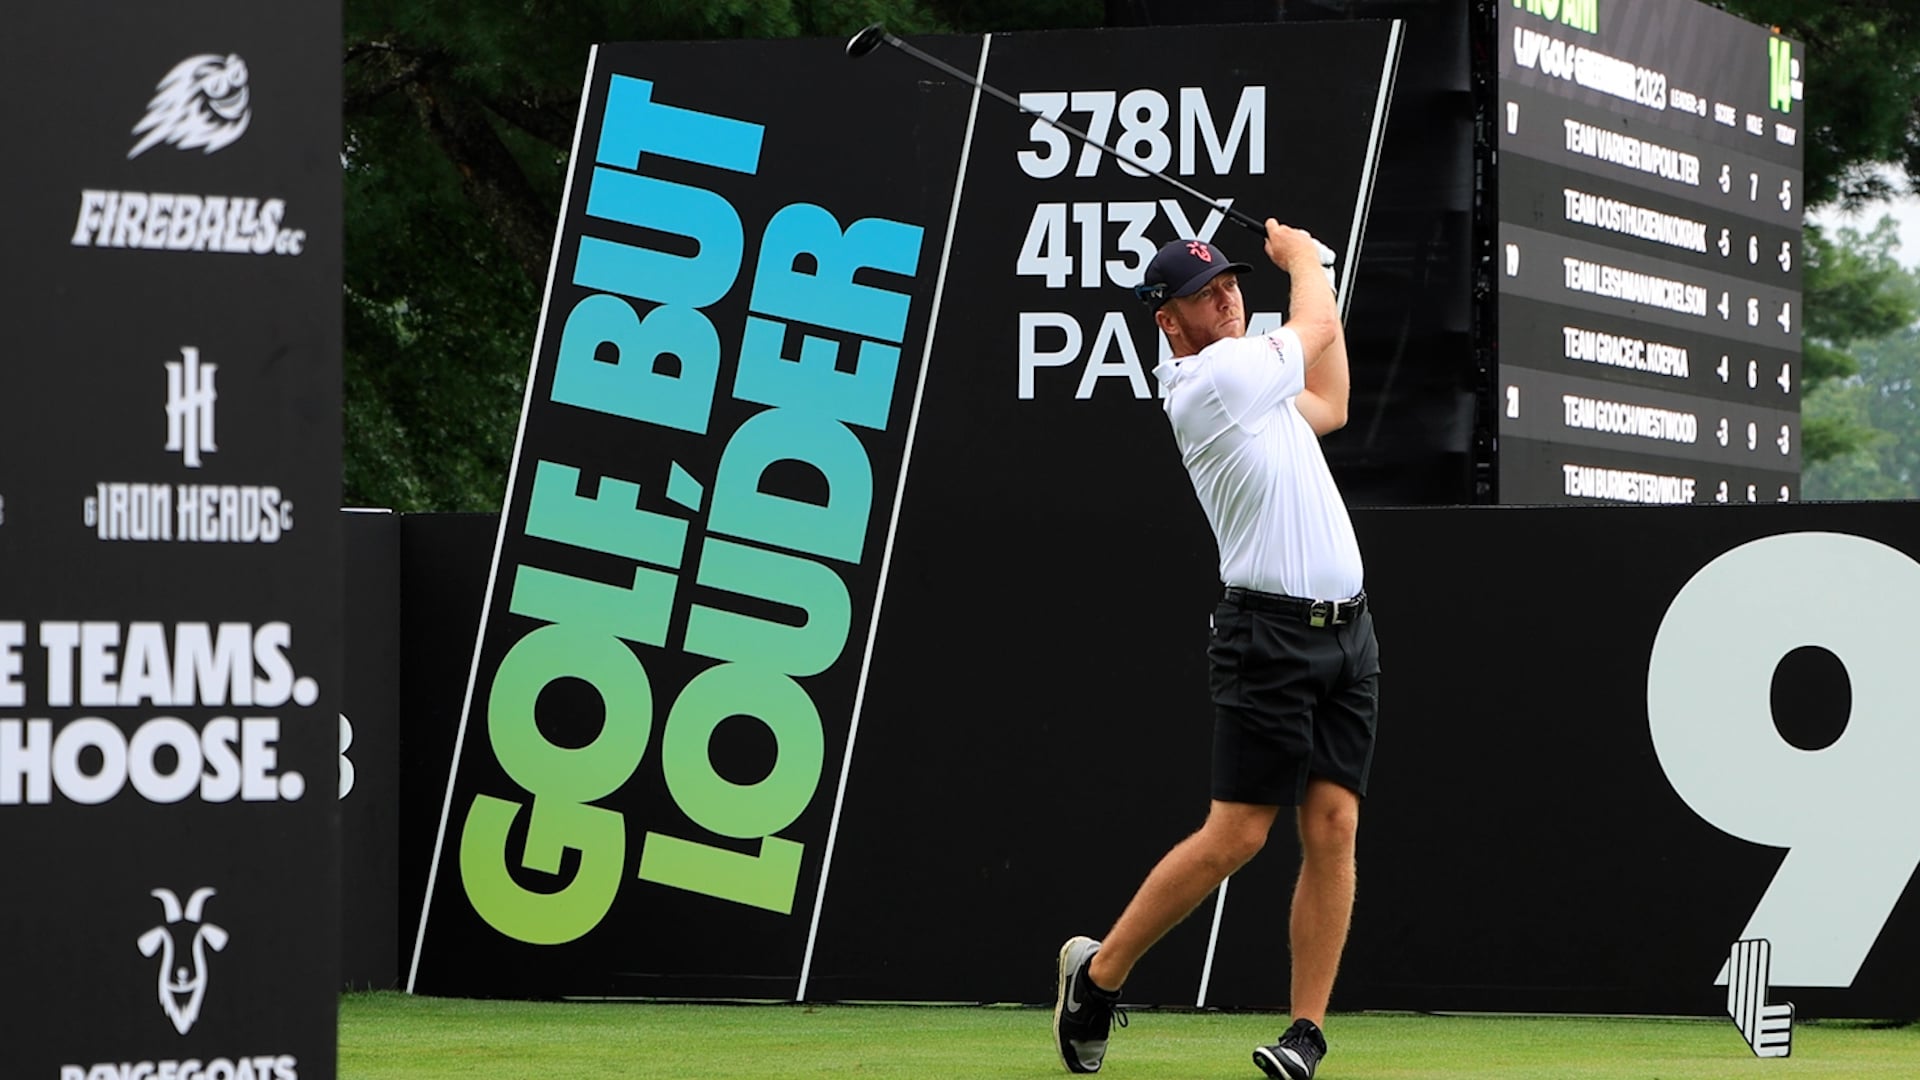 LIV Golf Greenbrier Pro Am Features Talor Gooch and Arian Foster on Vimeo